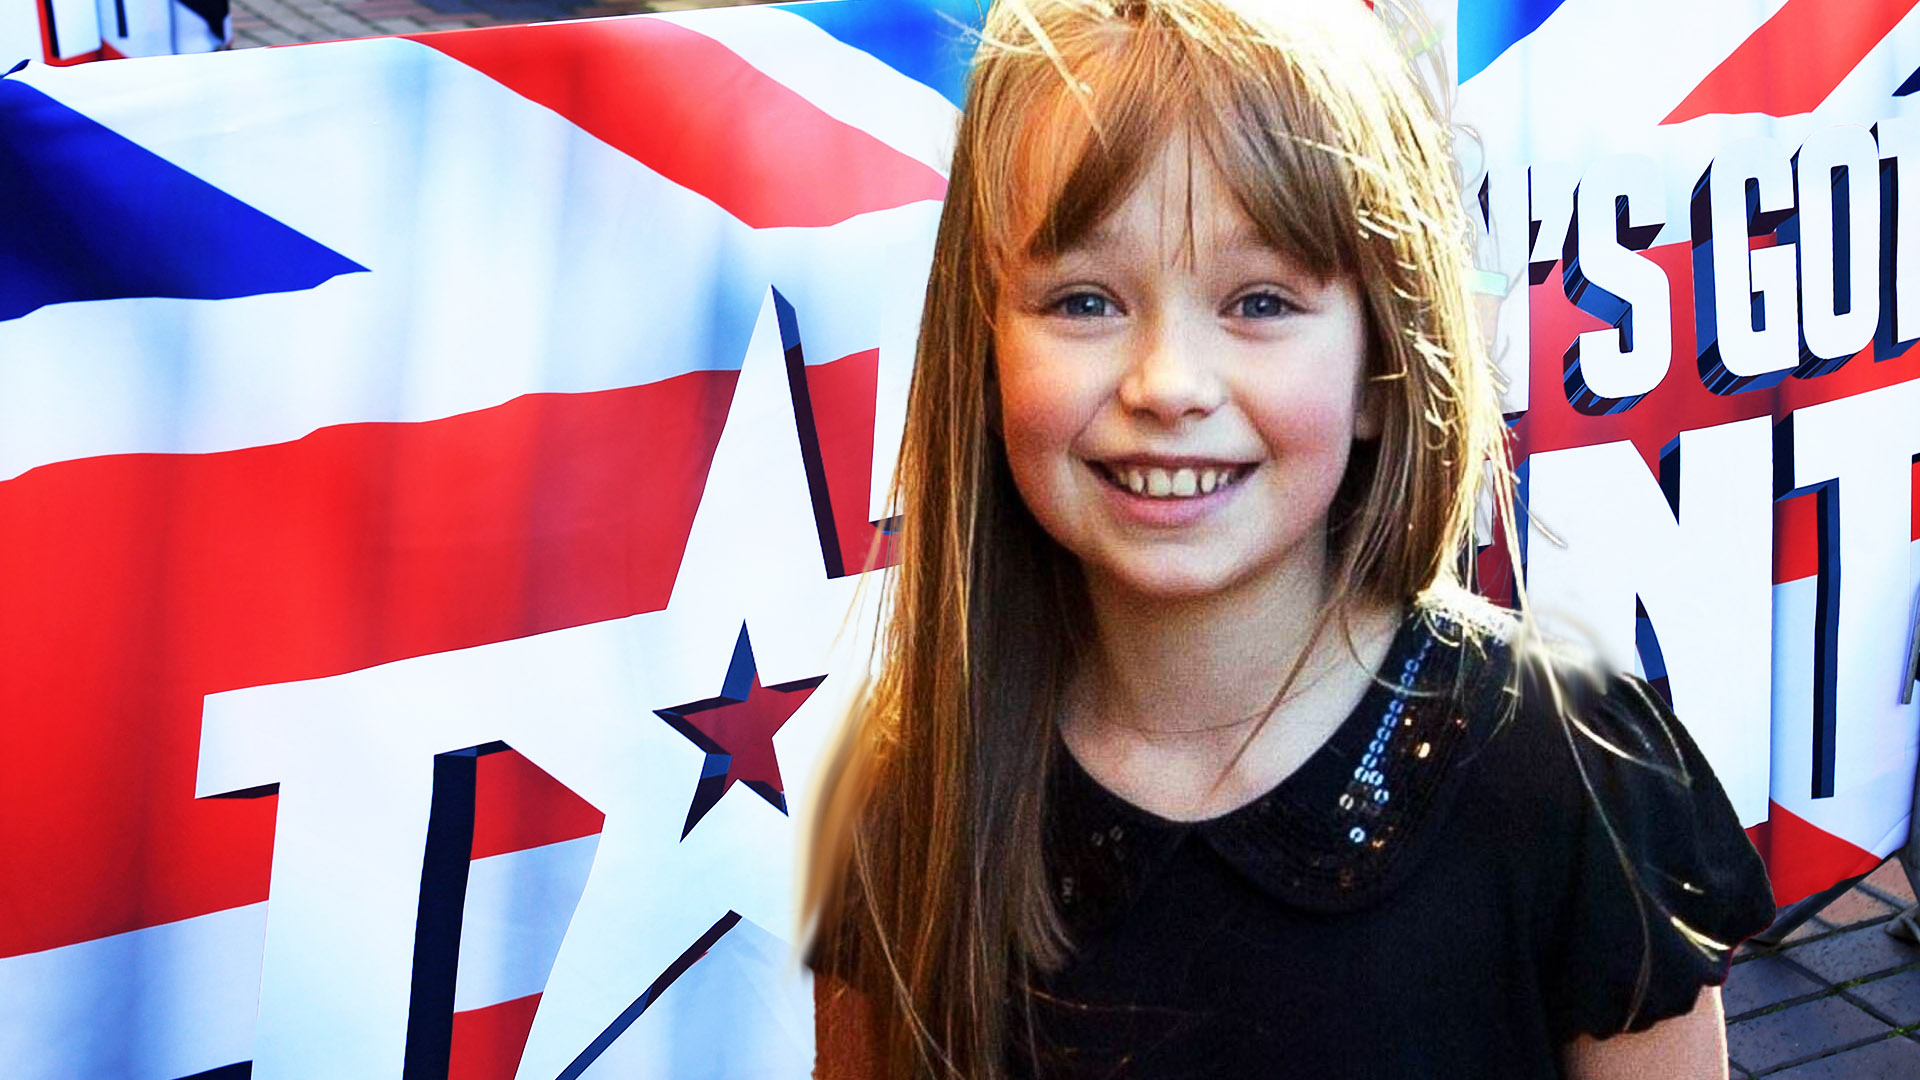 Britain's Got Talent child star Connie Talbot looks all grown up